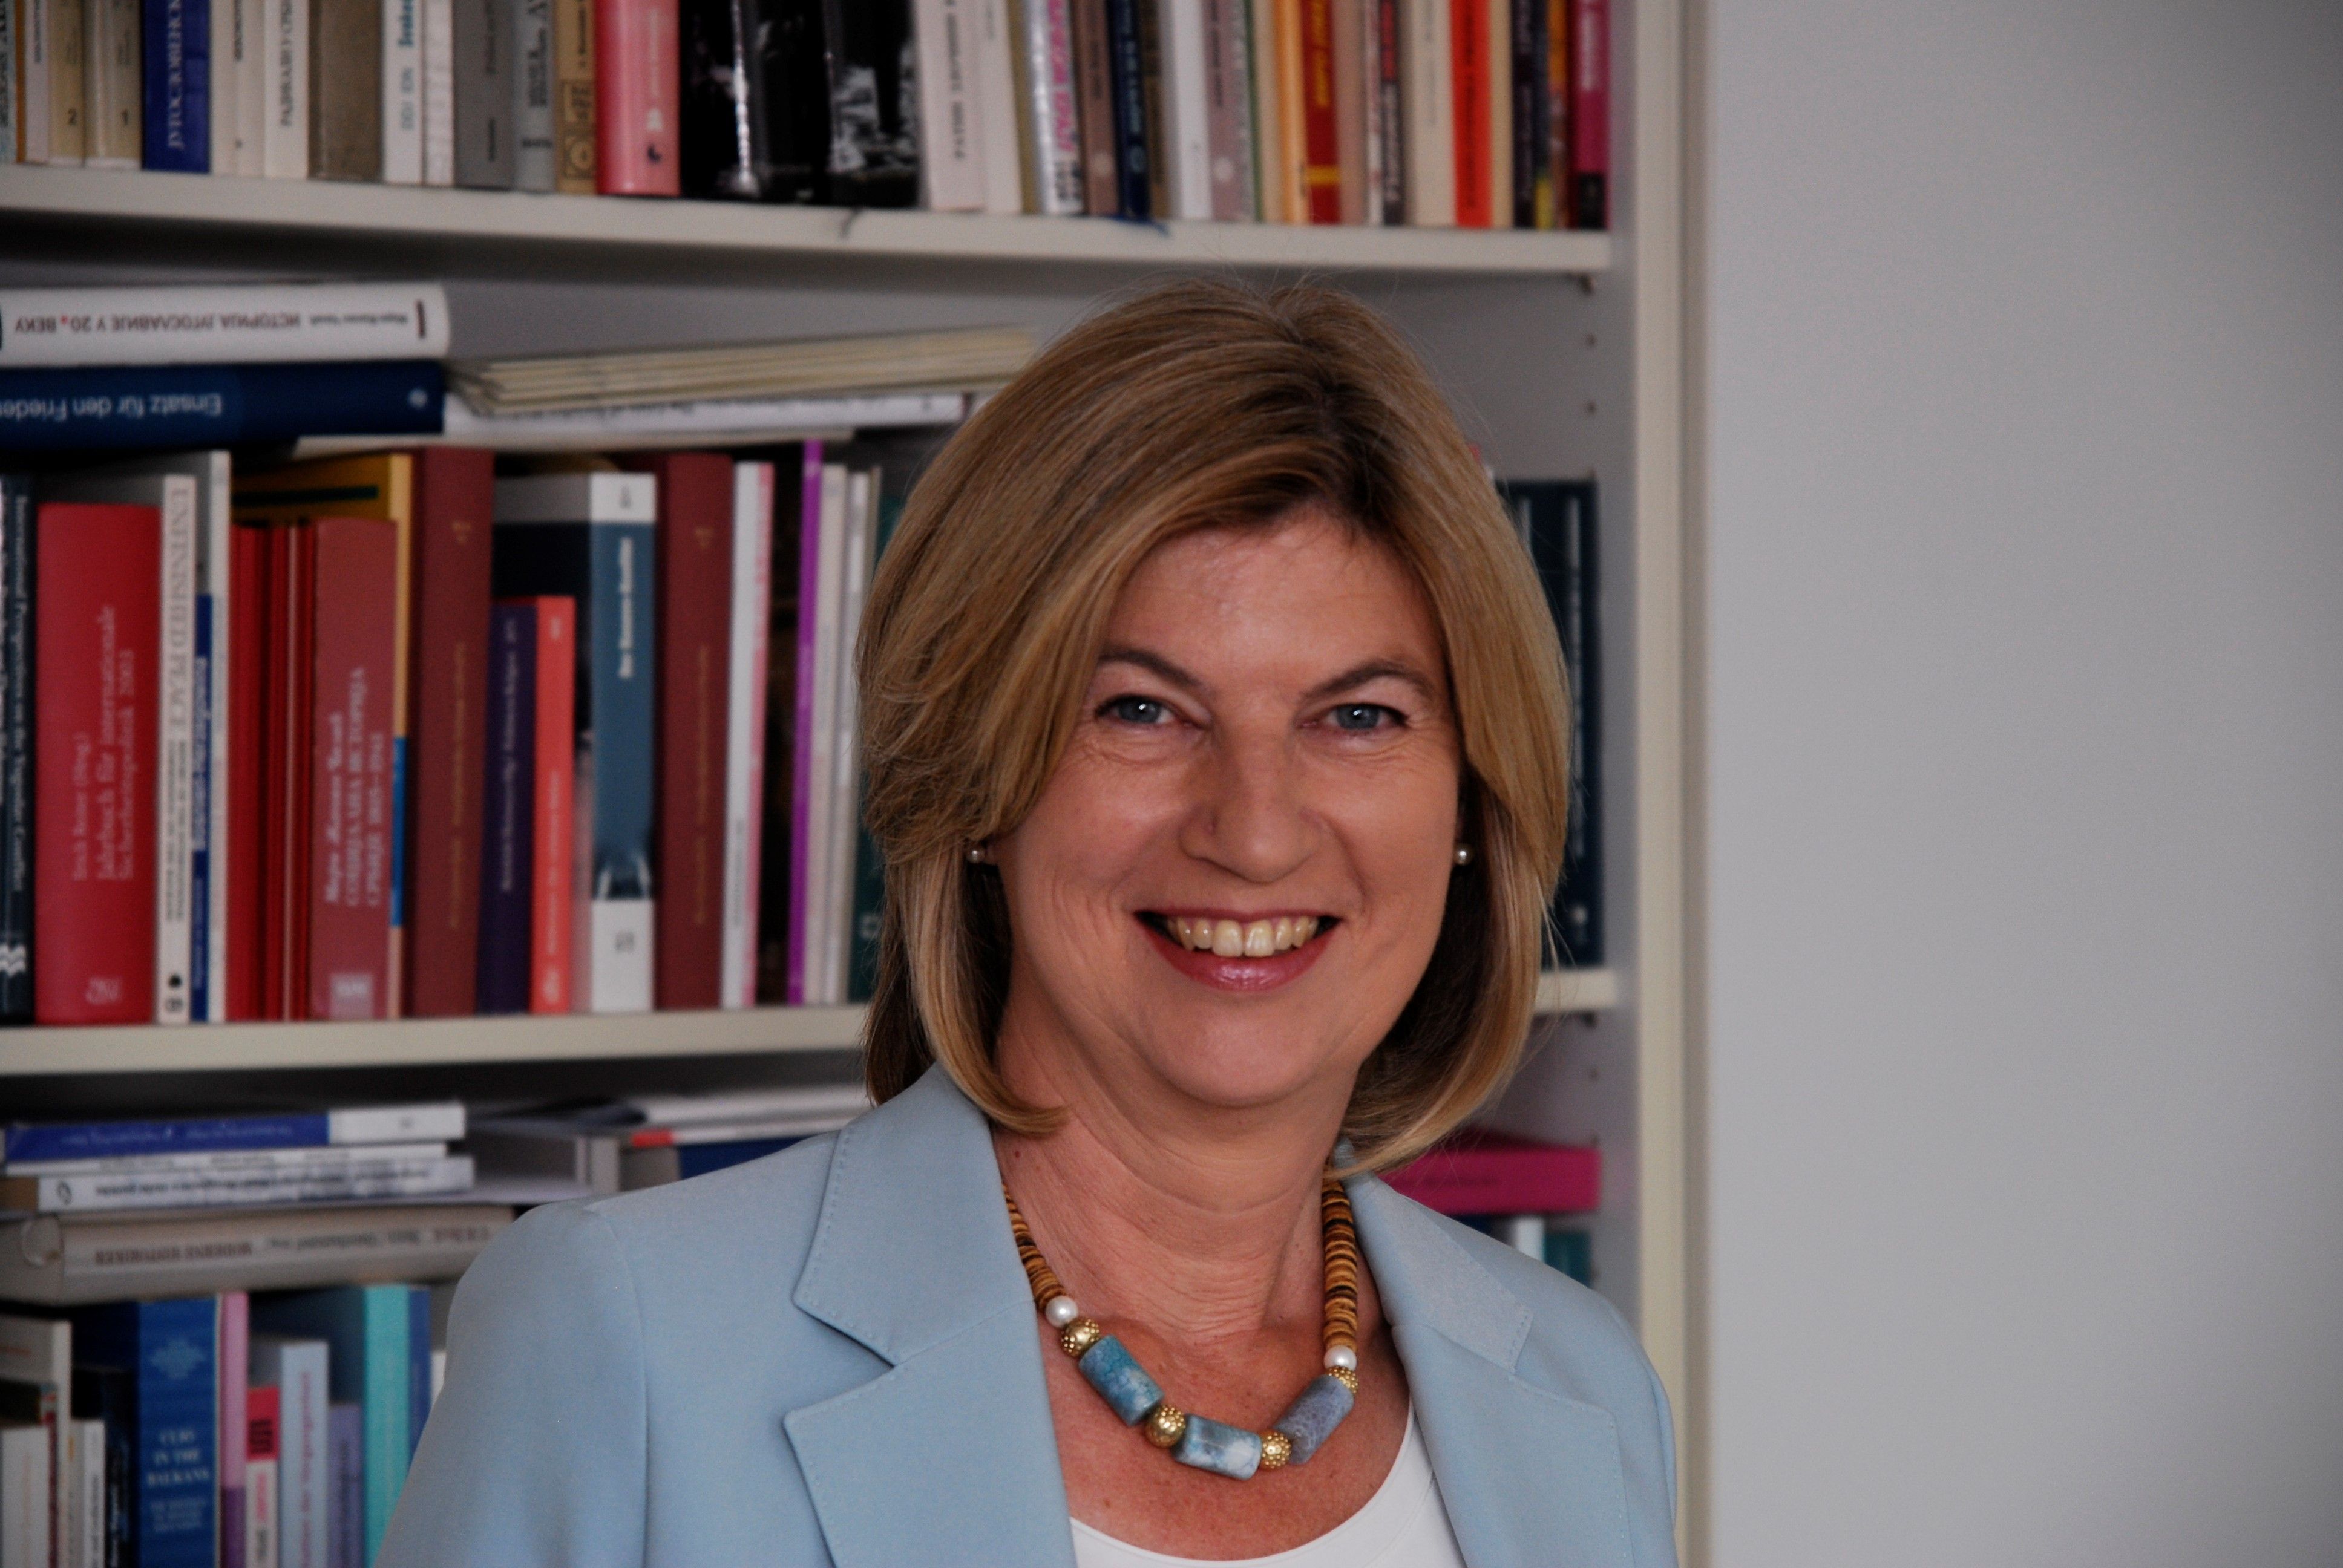 Dr. Marie-Janine Calic